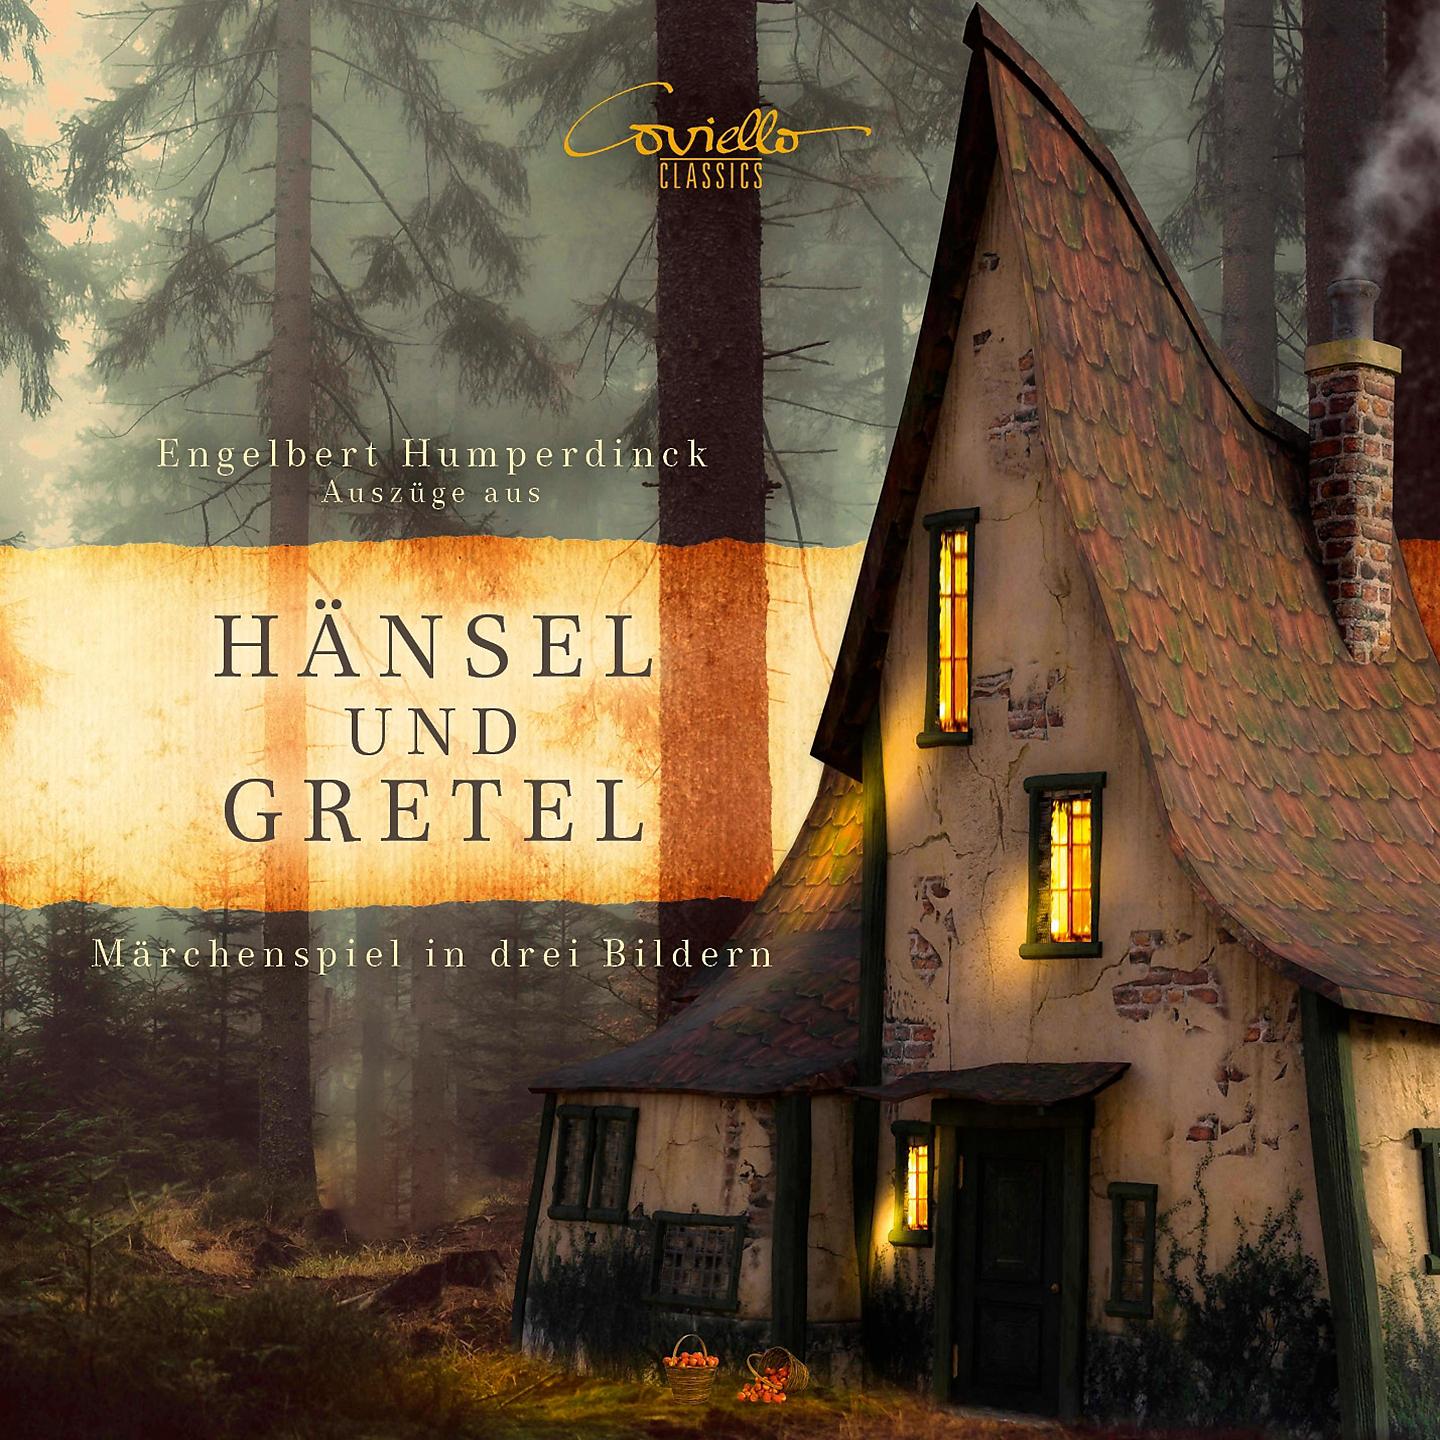 Постер альбома Humperdinck: Hänsel und Gretel